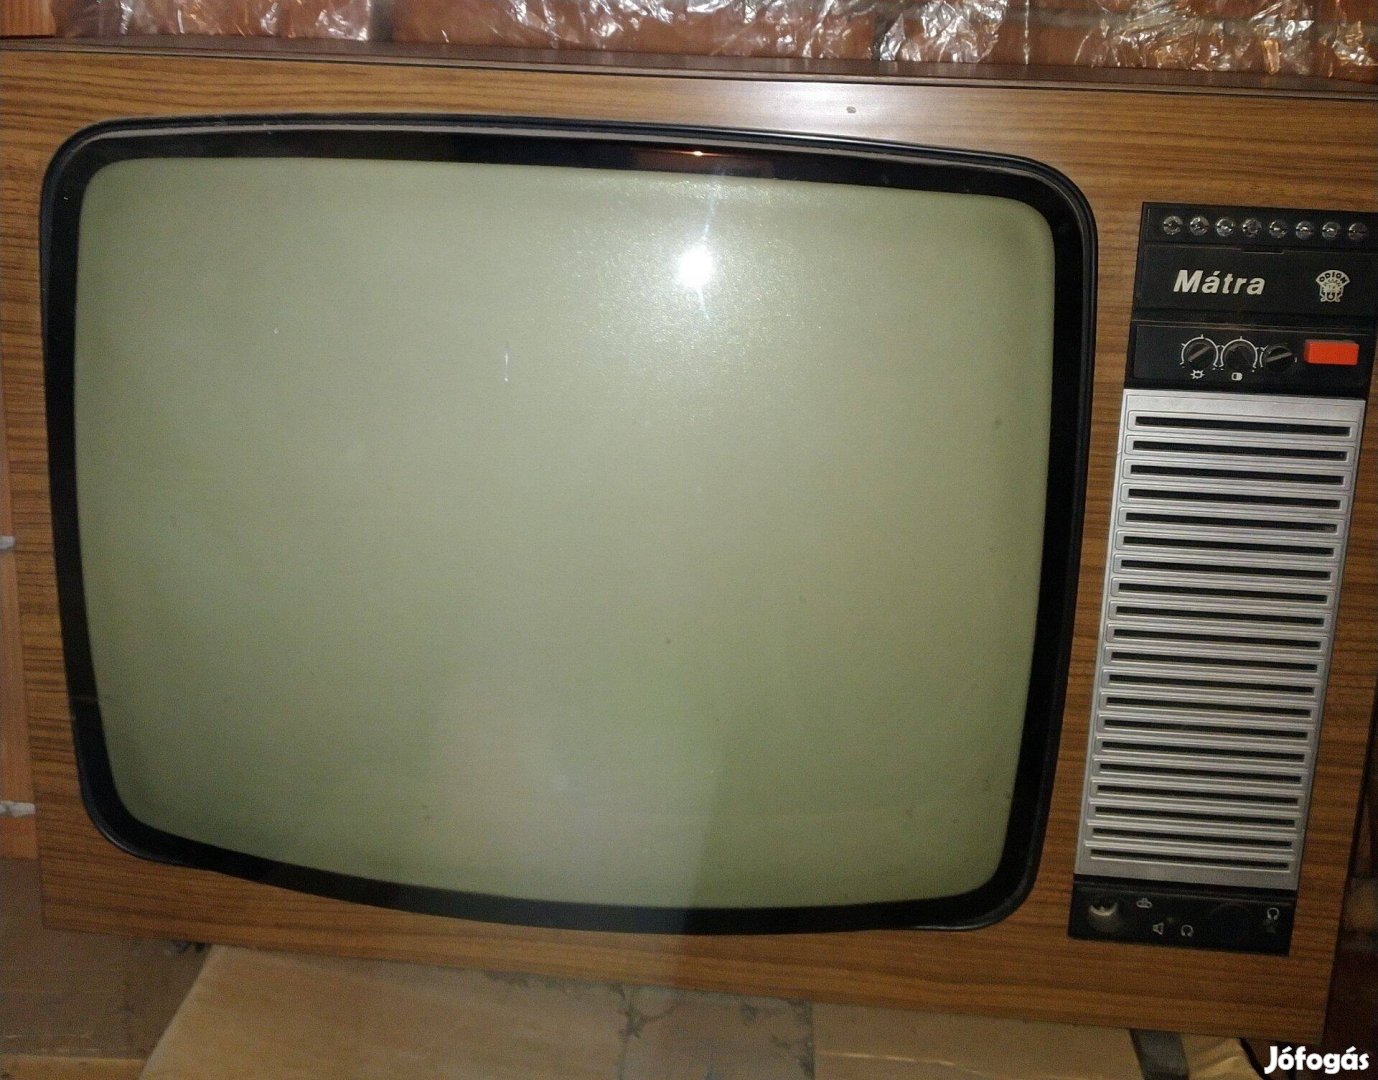 Mátra fekete-fehér tv - retro